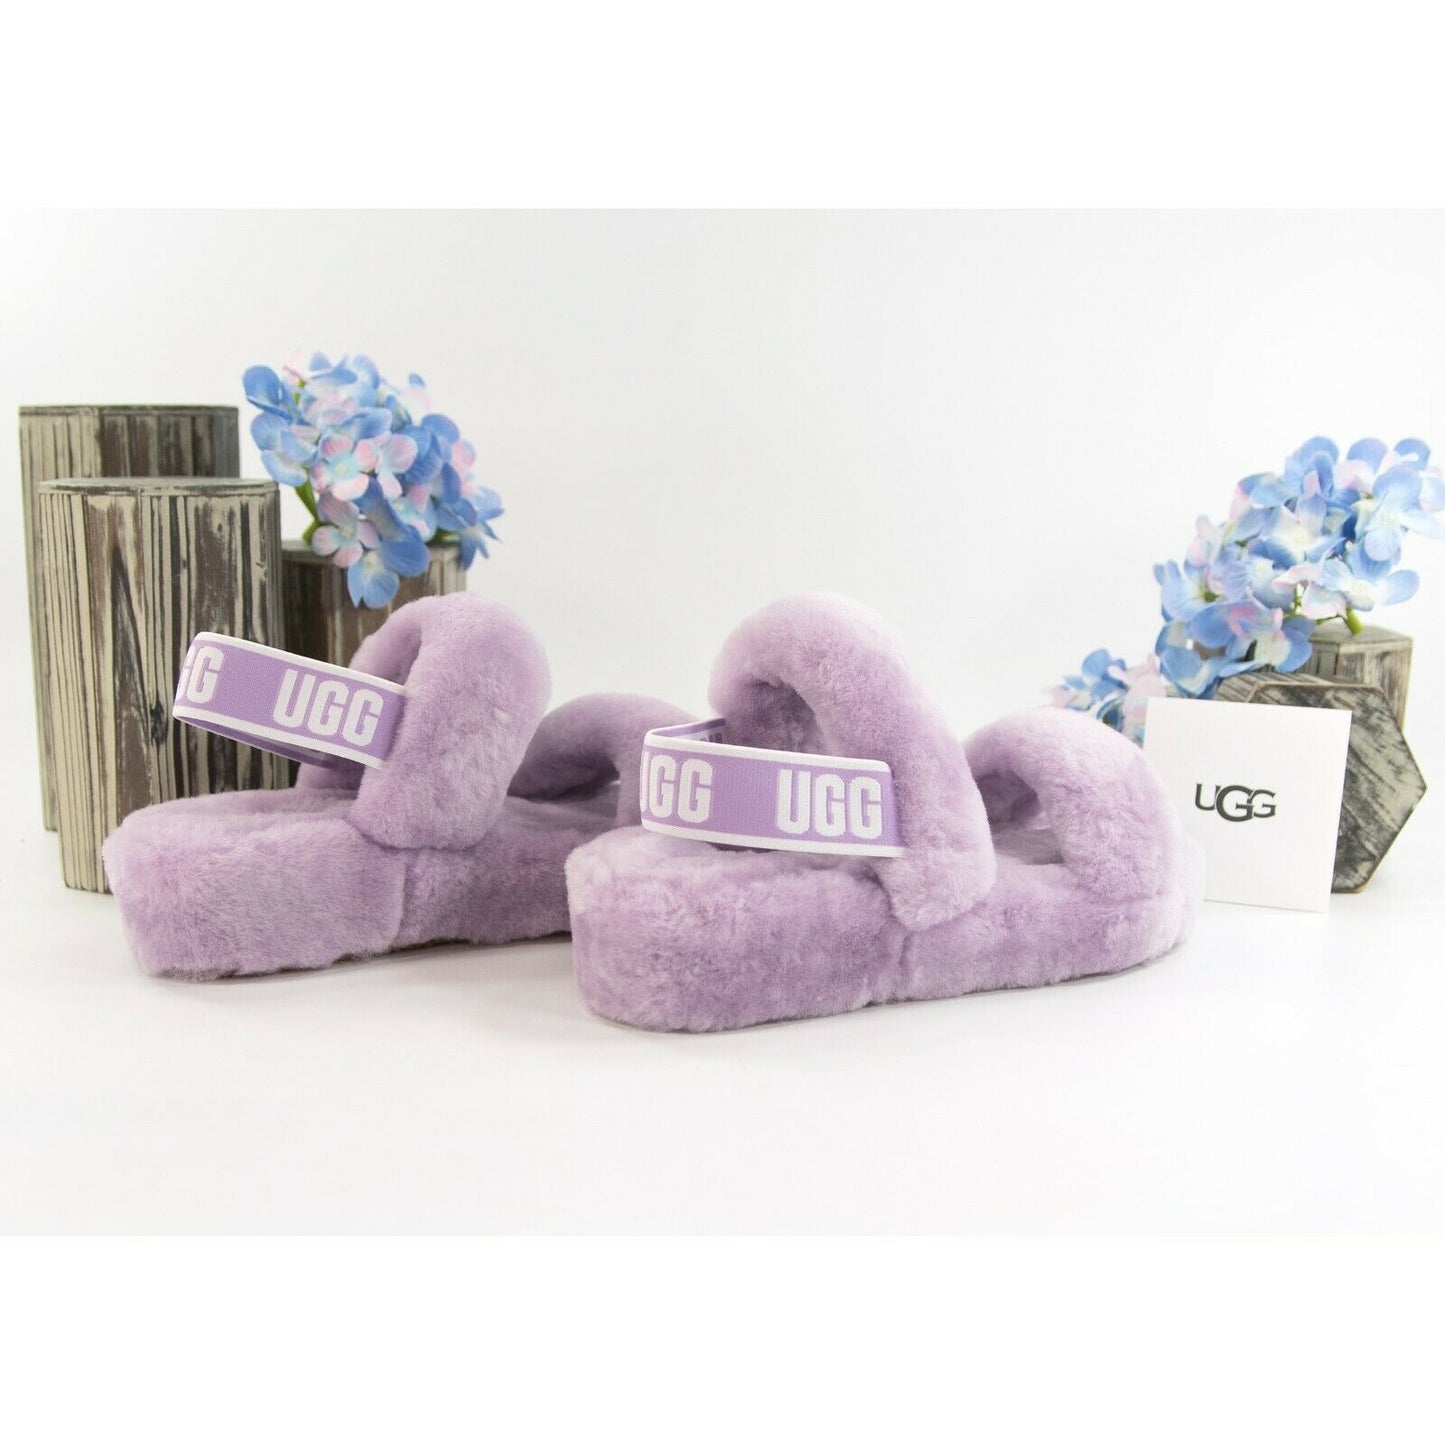 UGG Fluff Oh Yea Lilac Purple Sheepskin Fur Slippers Slides Sandals Sz 8 NIB